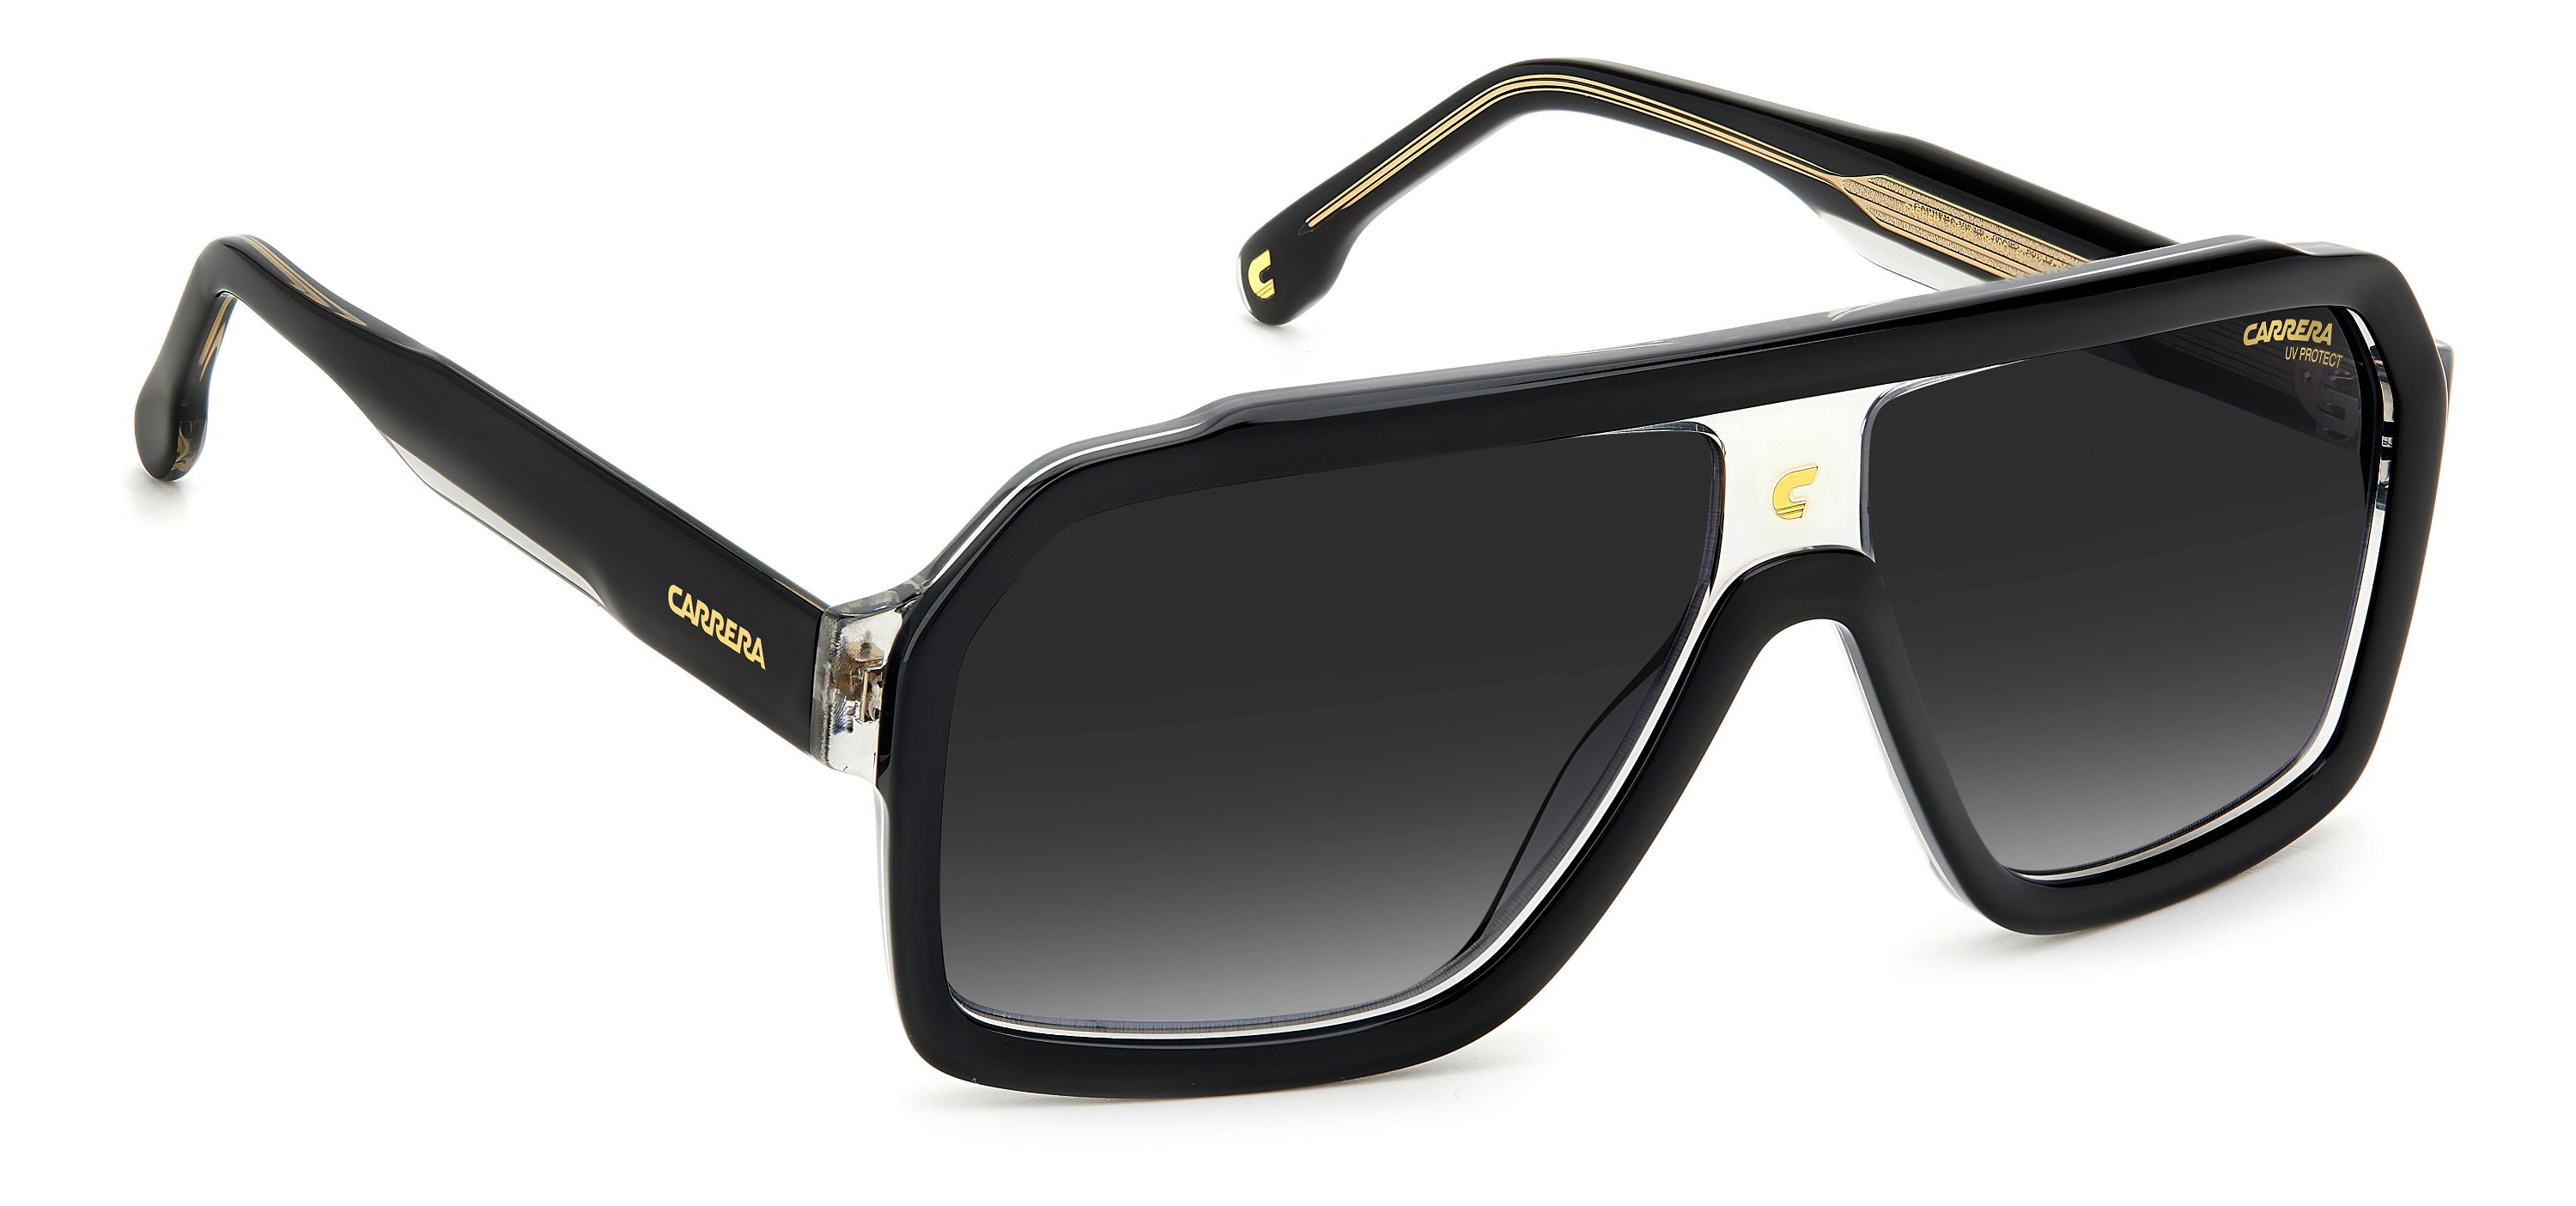 Carrera Sonnenbrille 1053/S 08A schwarz grau